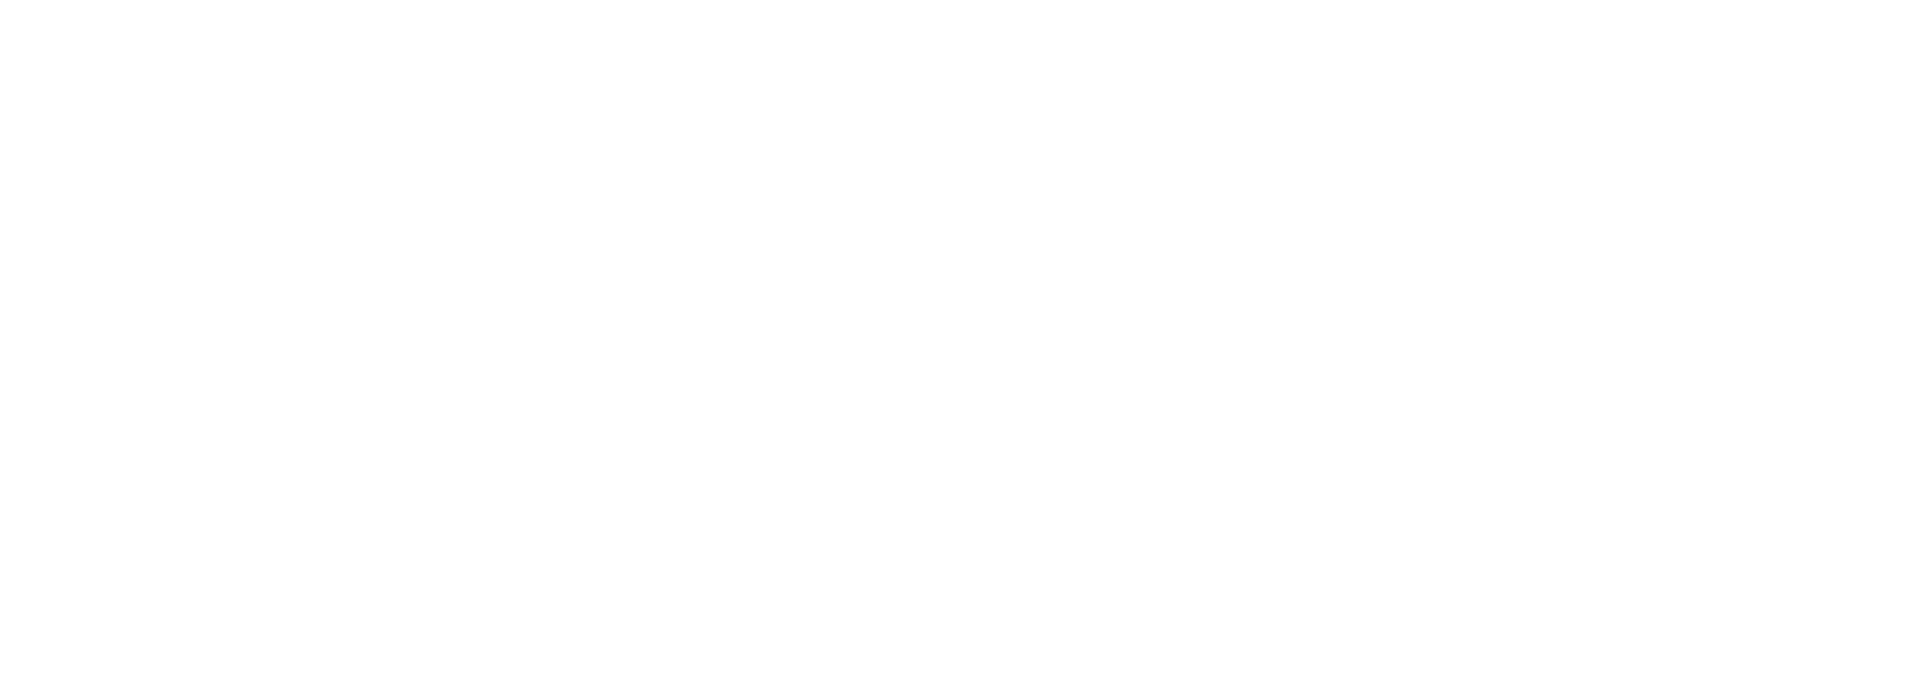 Cyclone logo white